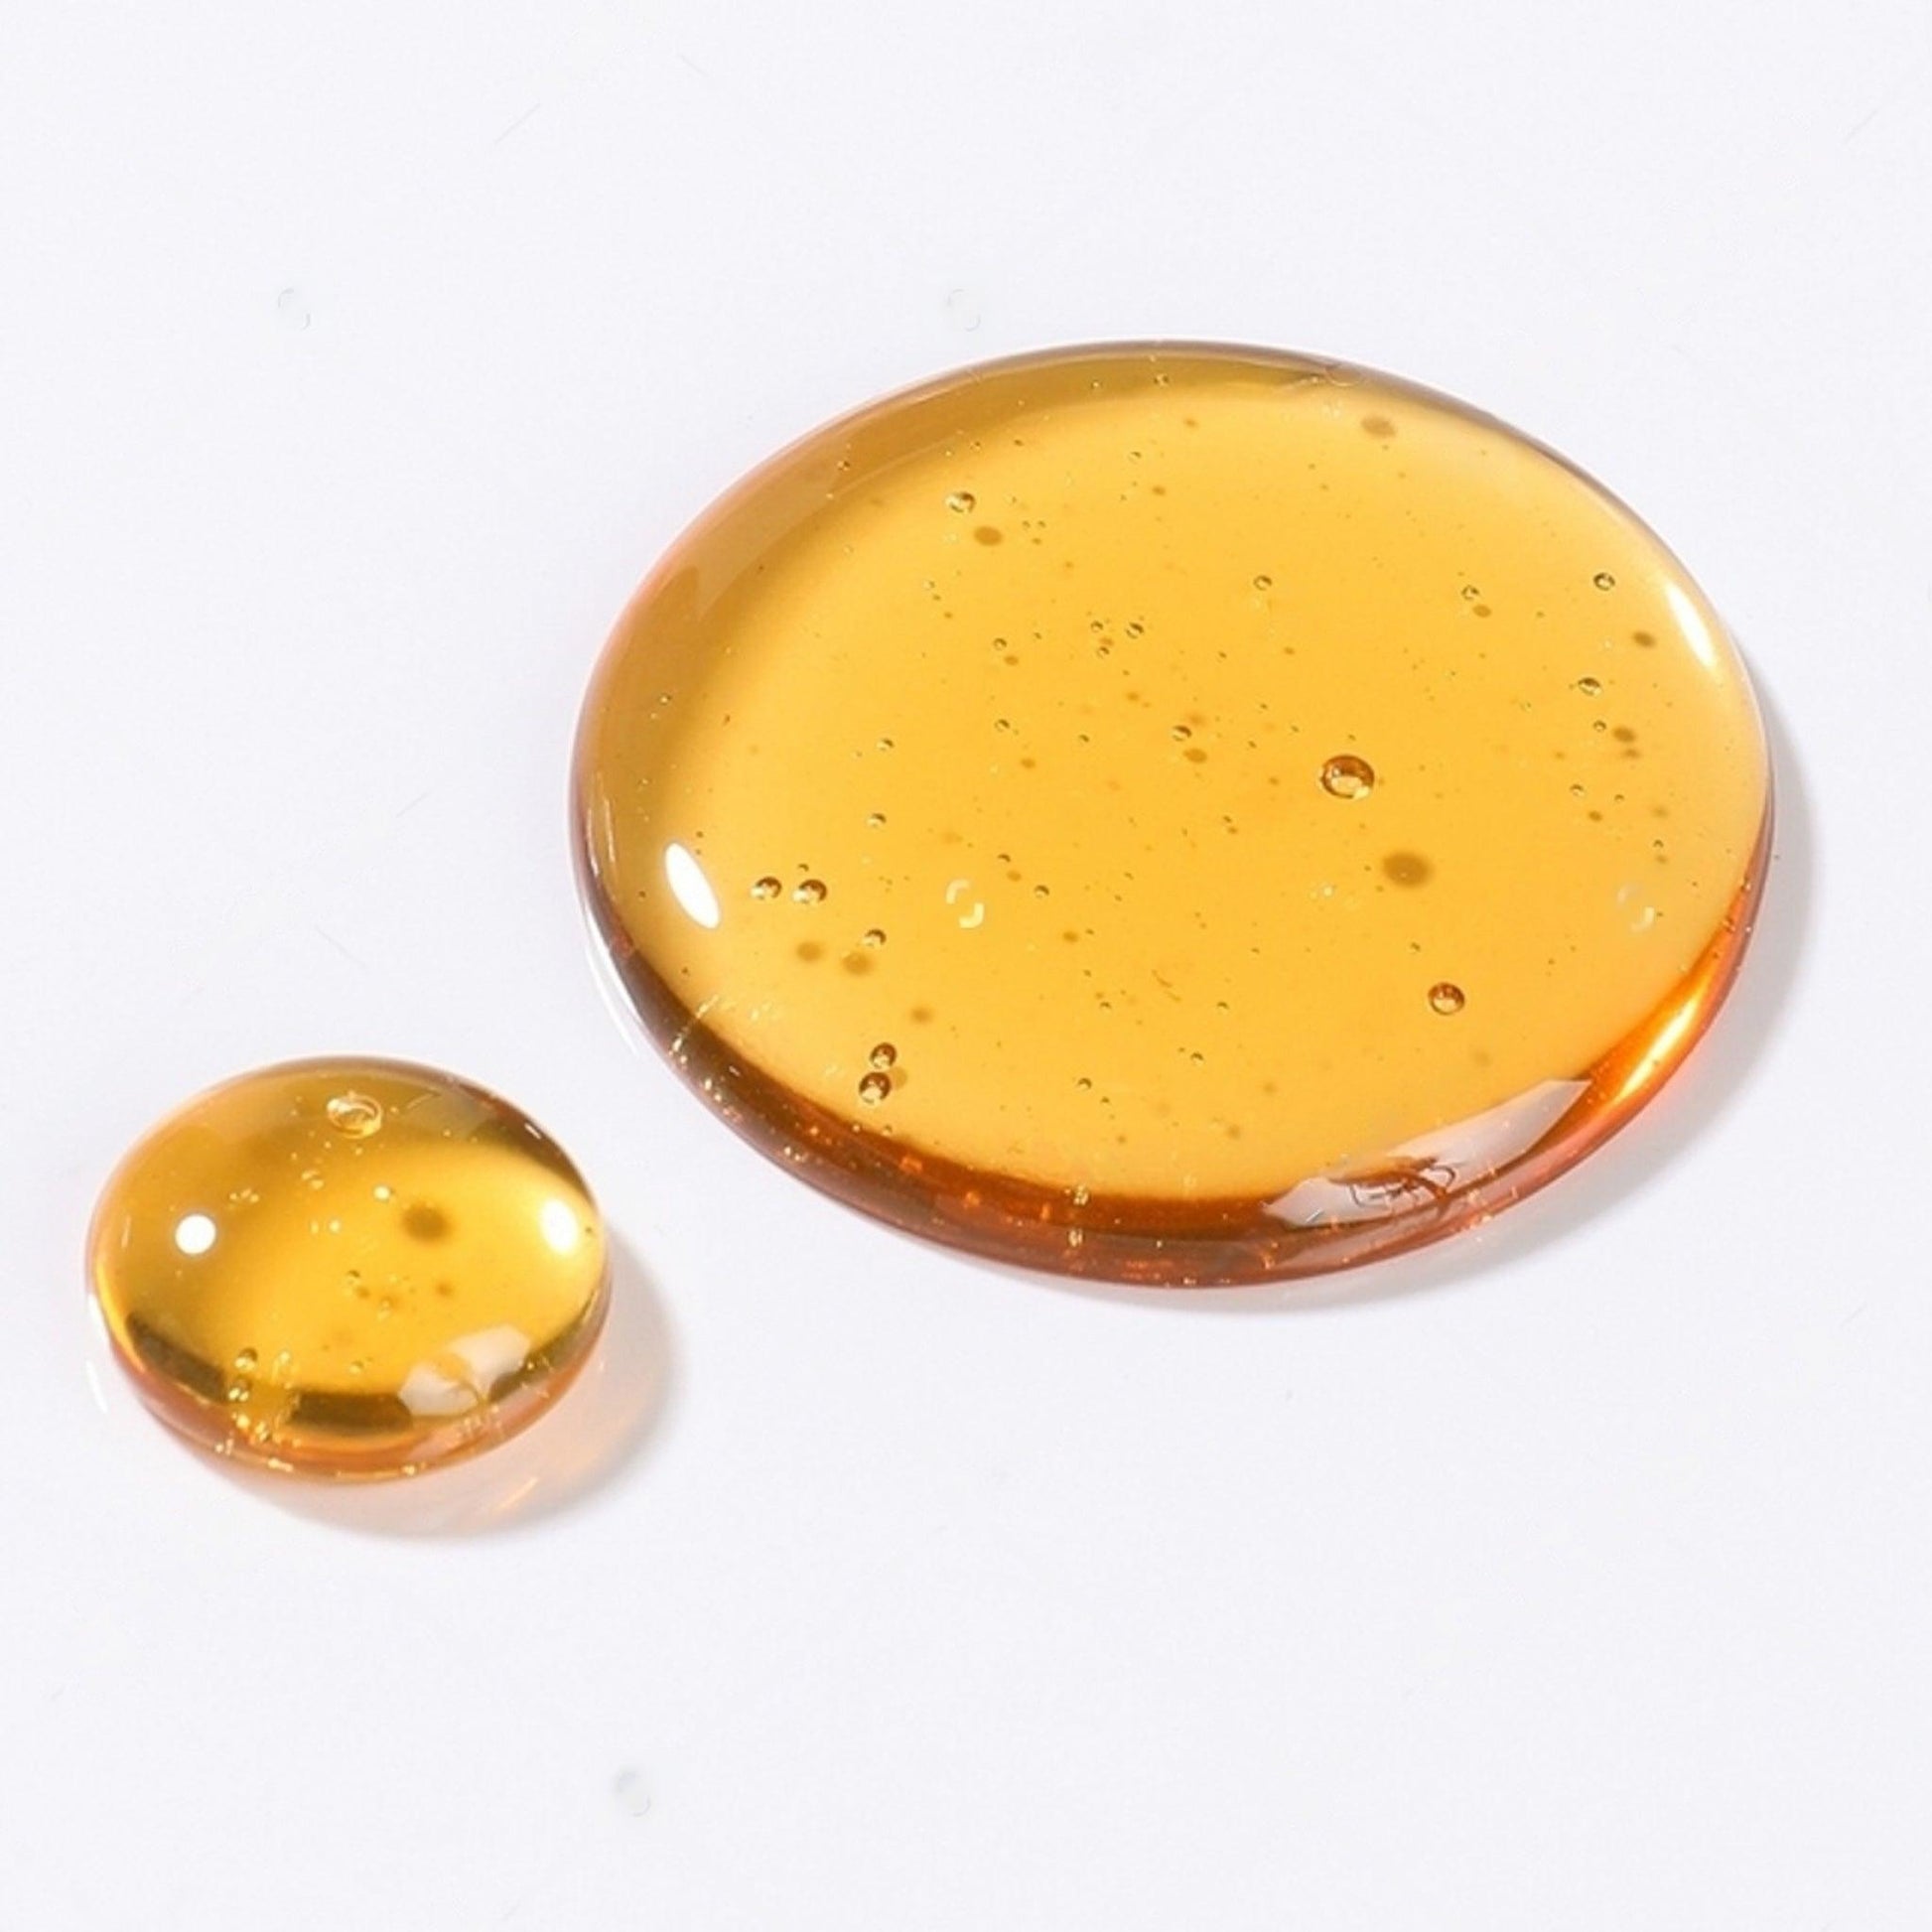 Mini Jasmine Body Oil  - Orive Organics